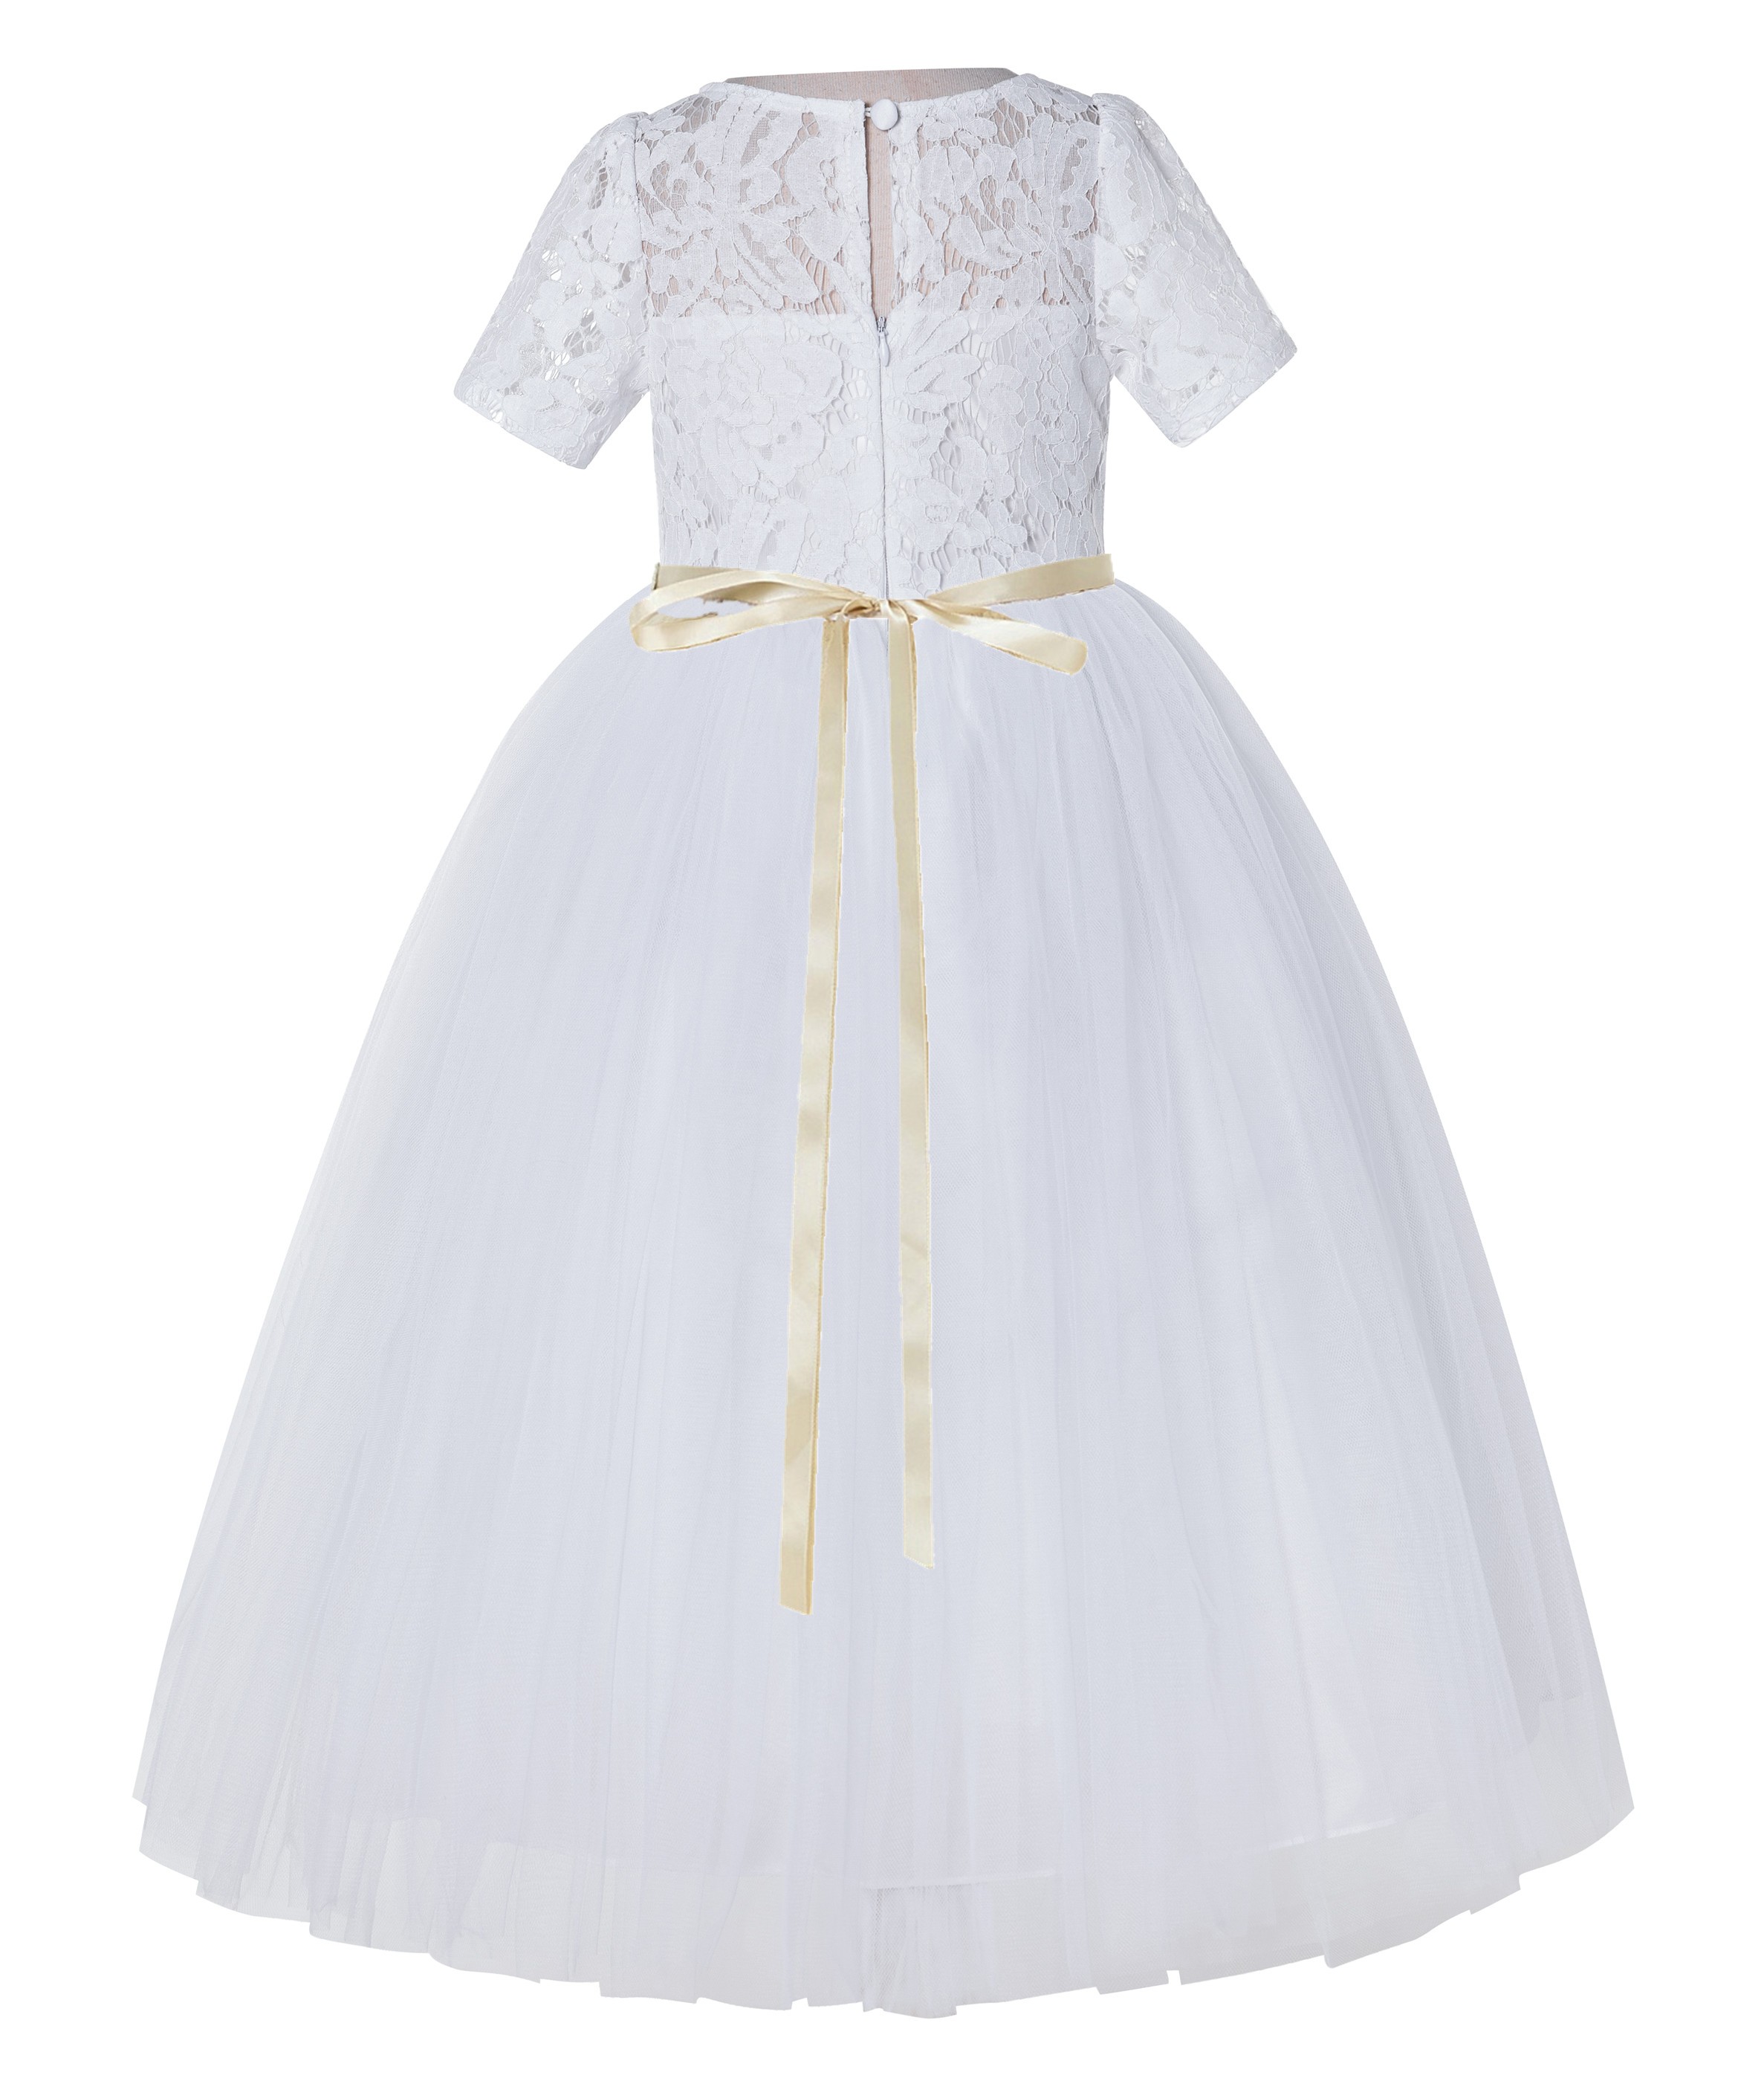 White / Champagne Floral Lace Flower Girl Dress Communion Dress LG2